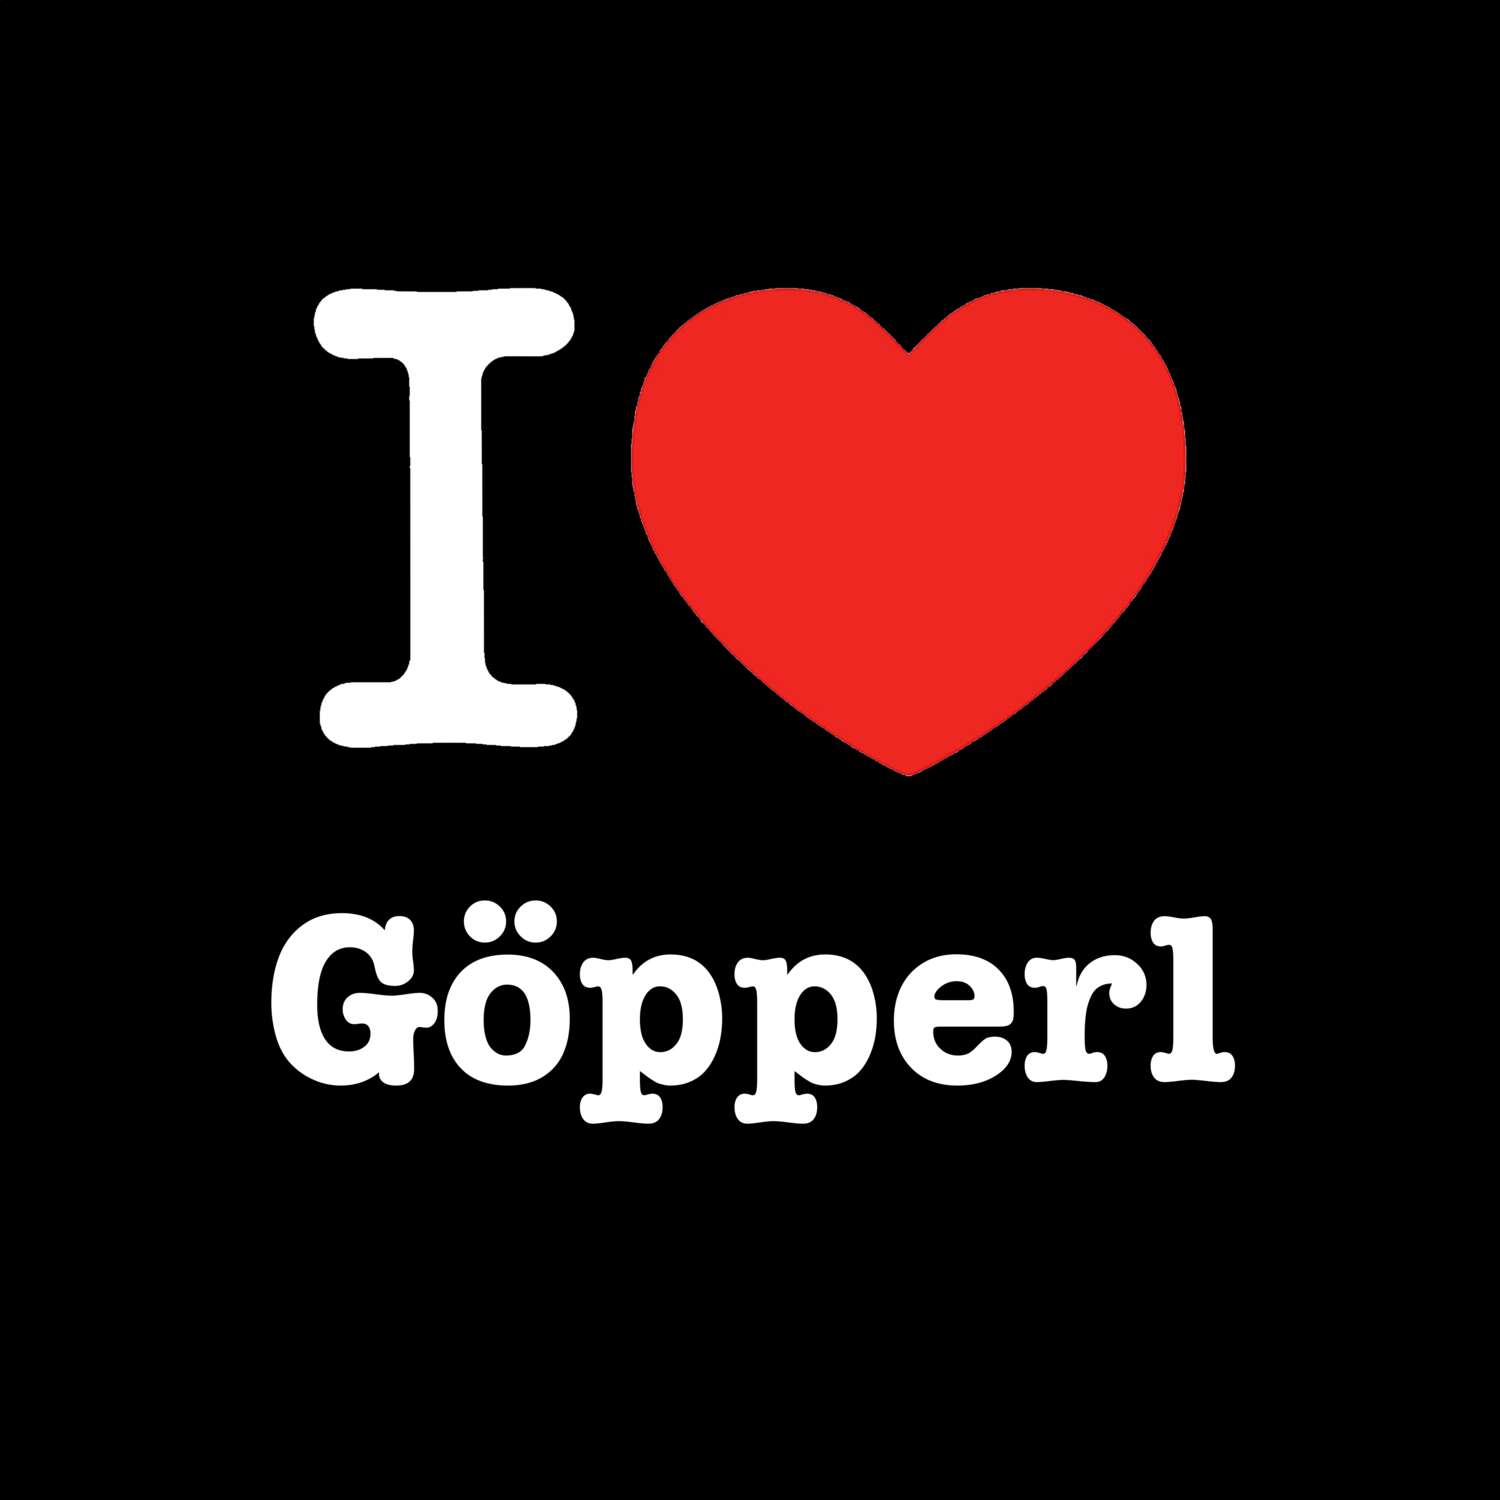 Göpperl T-Shirt »I love«